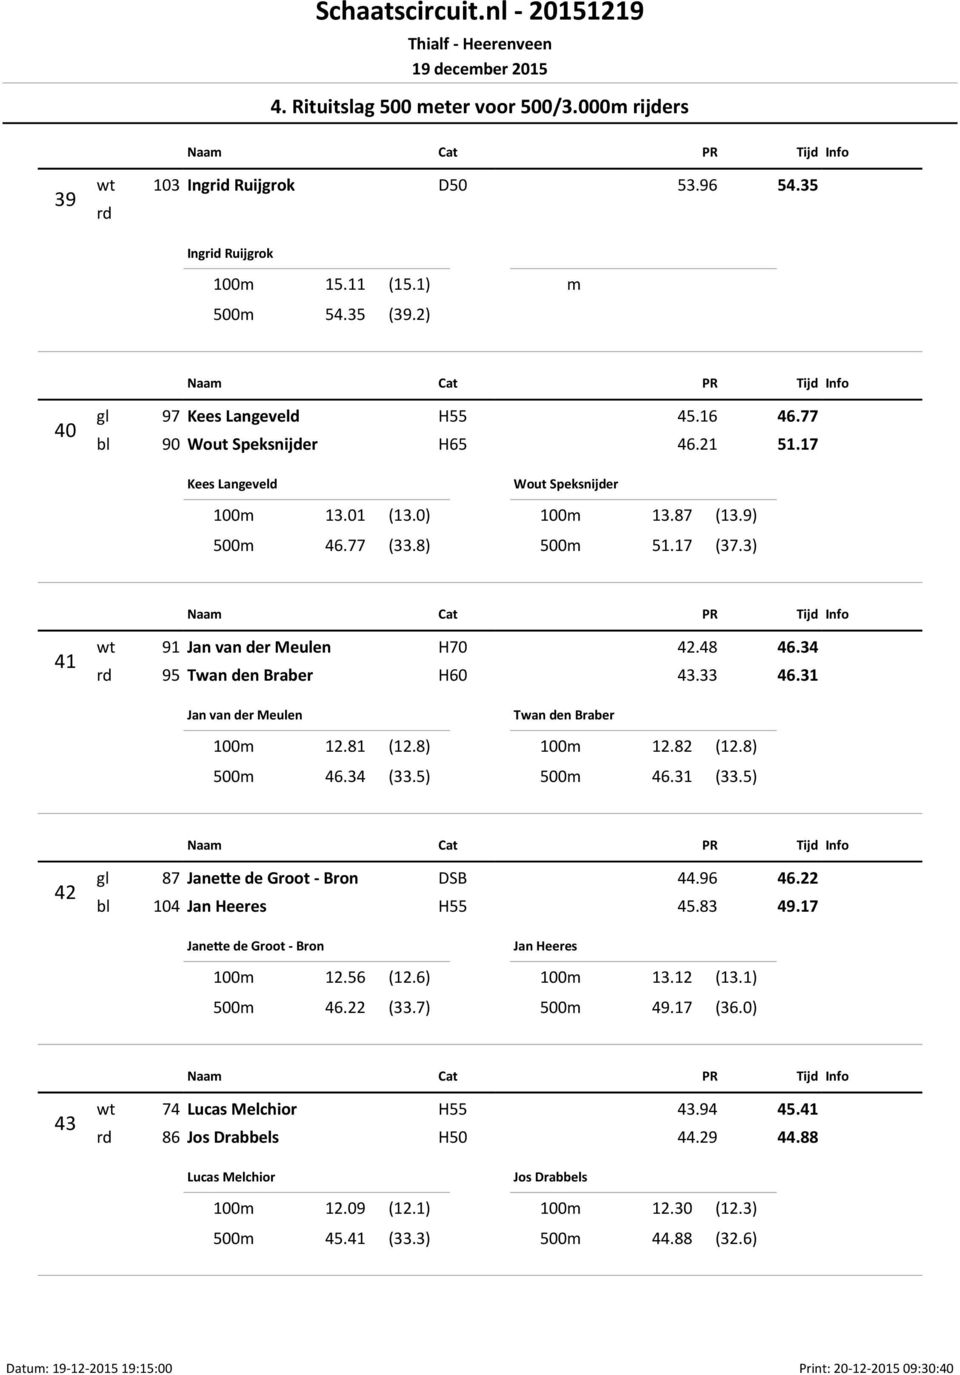 34 rd 95 Twan den Braber H60 43.33 46.31 Jan van der Meulen 100m 12.81 (12.8) 500m 46.34 (33.5) Twan den Braber 100m 12.82 (12.8) 500m 46.31 (33.5) 42 gl 87 Jane e de Groot - Bron DSB 44.96 46.